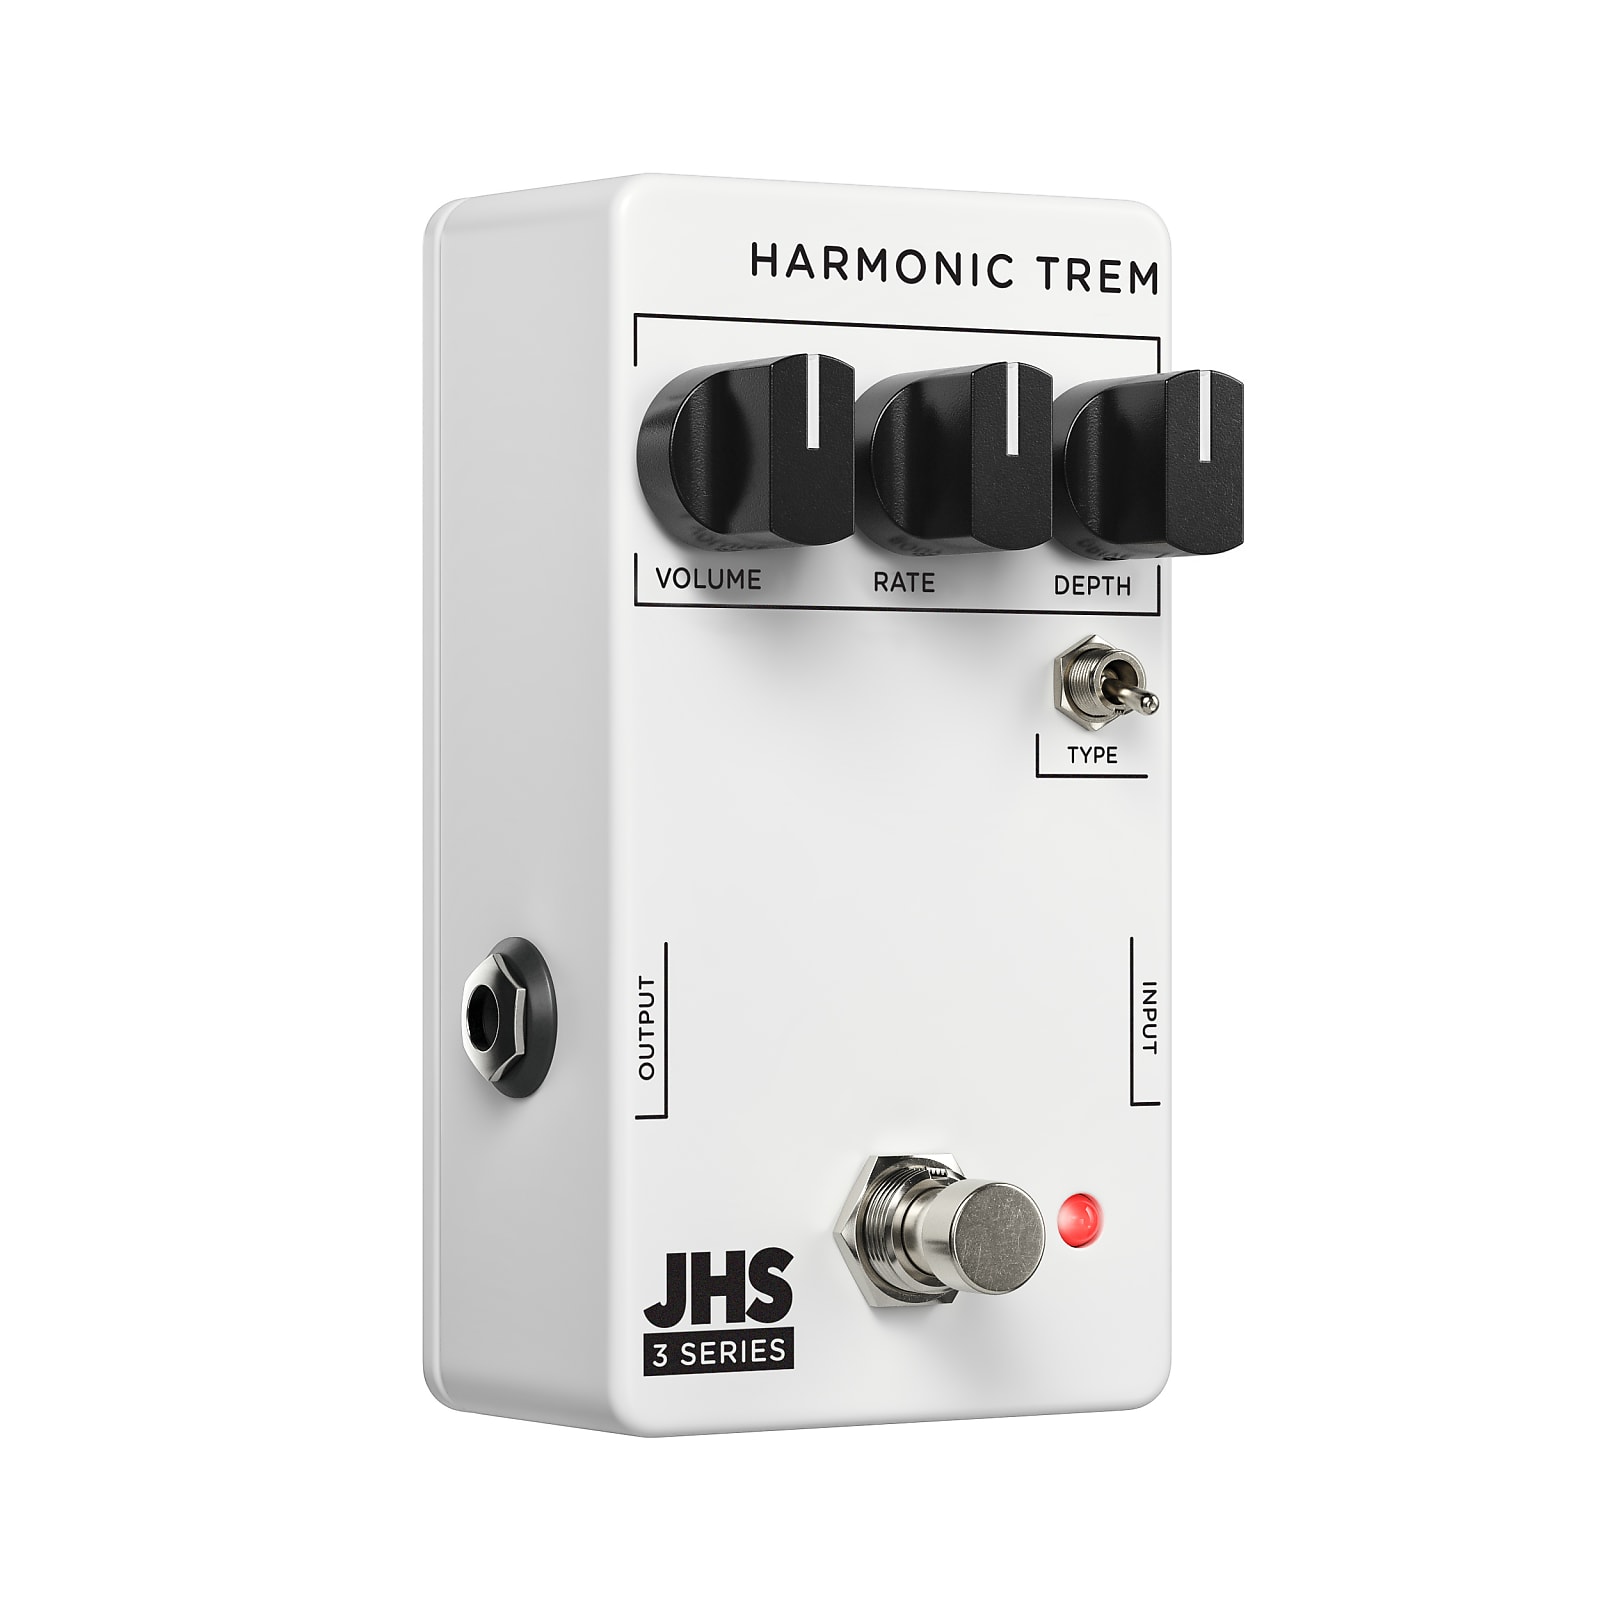 JHS 3 Series Harmonic Trem Tremolo Effects Pedal